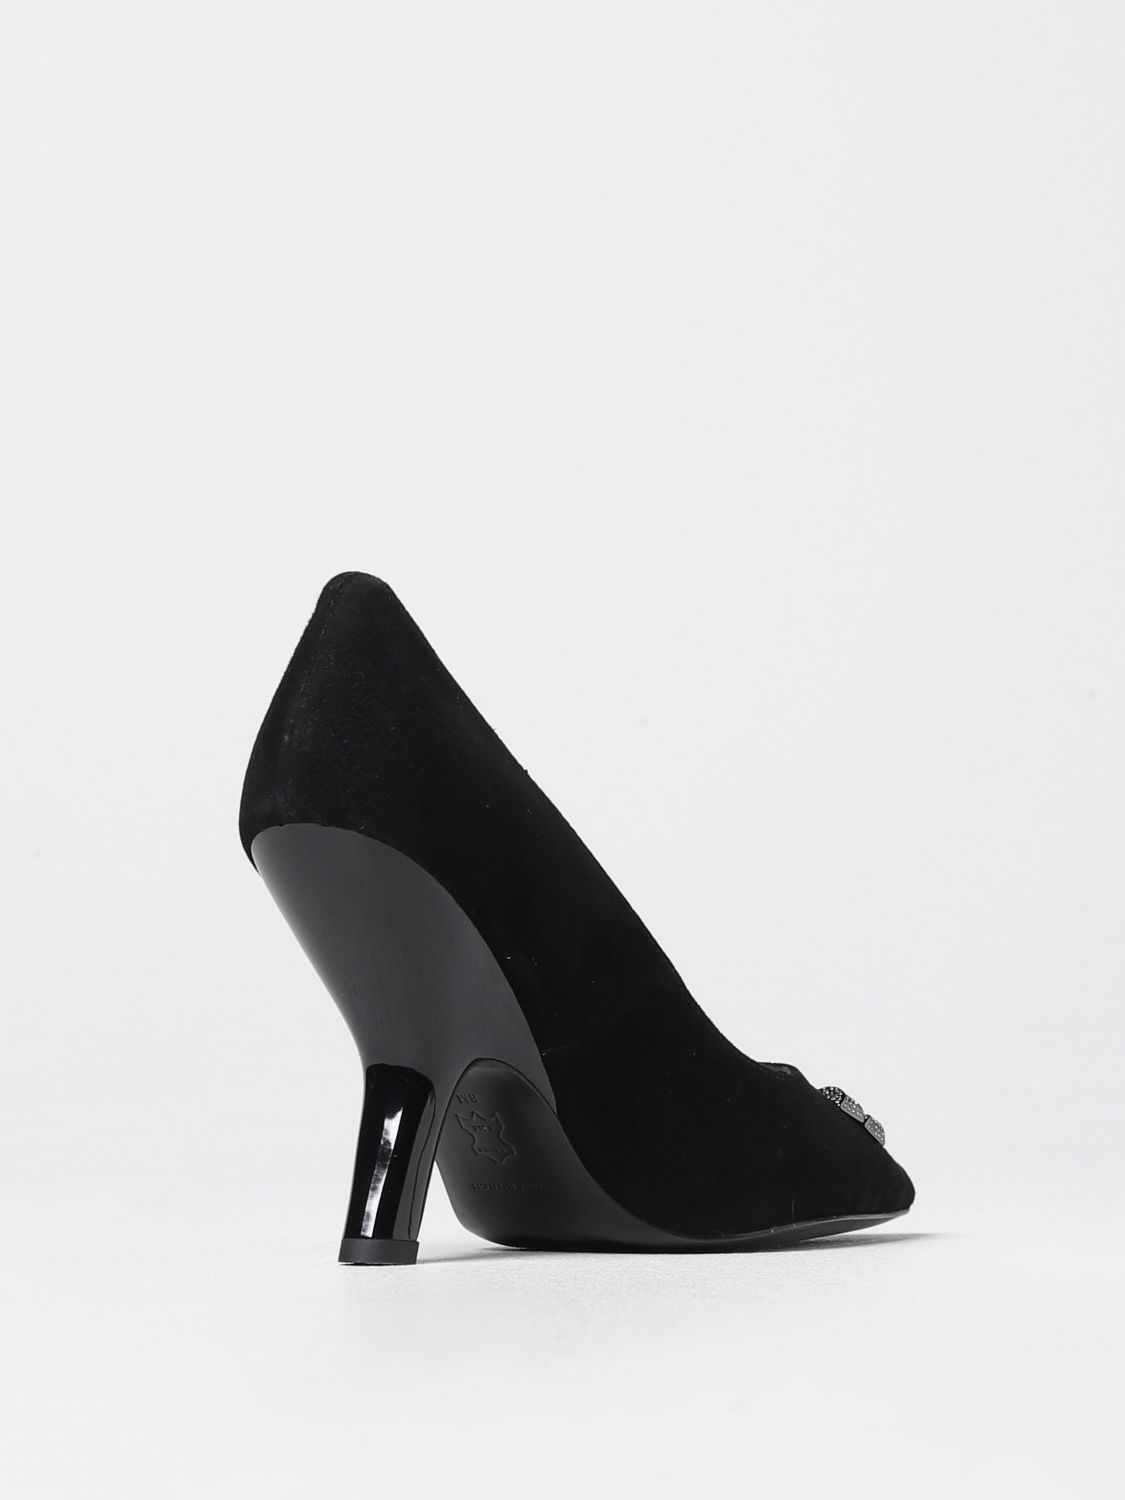 TORY BURCH: high heel shoes for woman - Black | Tory Burch high heel shoes  141621 online on 